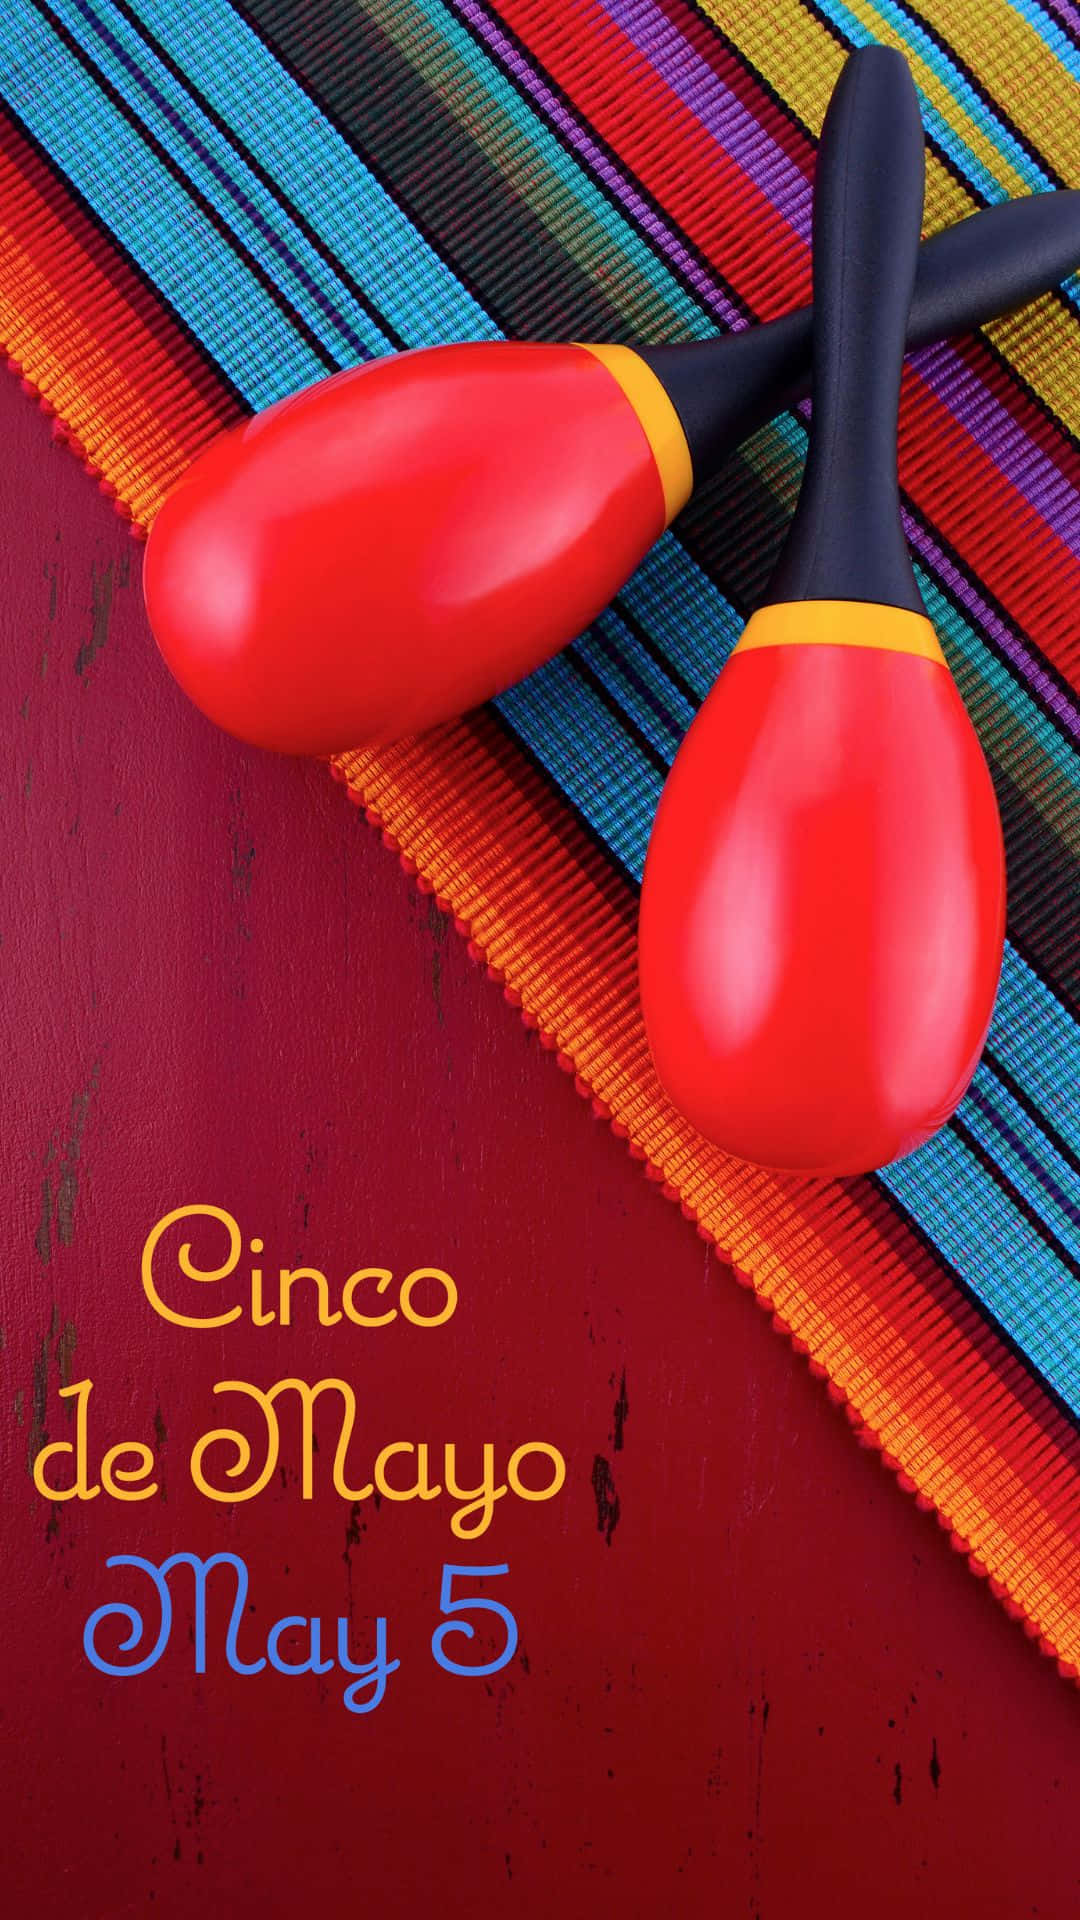 Feiernsie Die Kultur Mexikos Mit Cinco De Mayo. Wallpaper